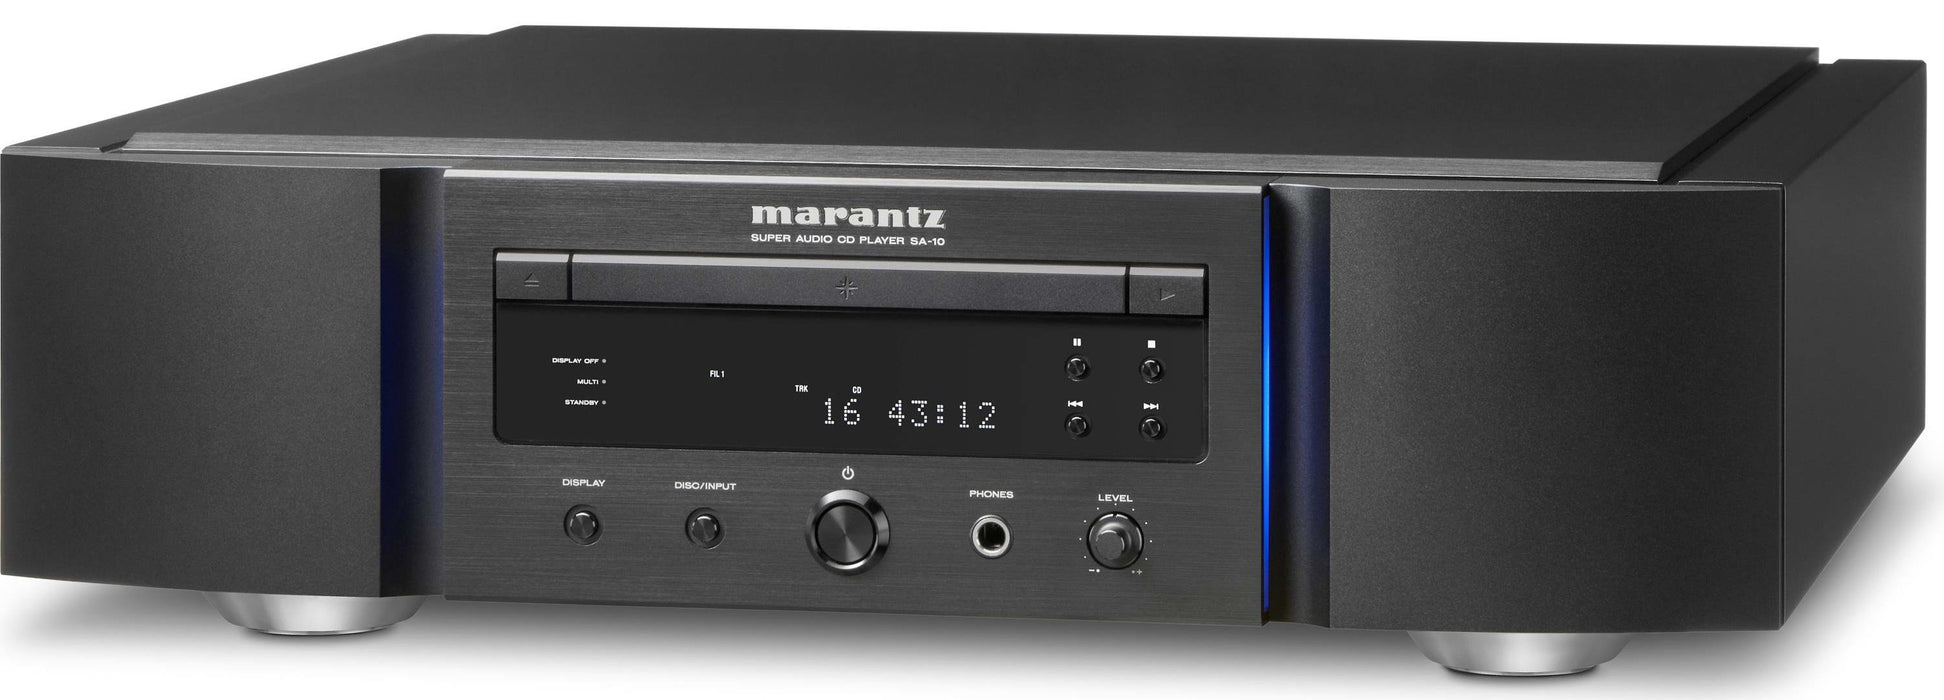 Marantz SA-10 - Lecteur Super SACD/CD de référence avec DAC